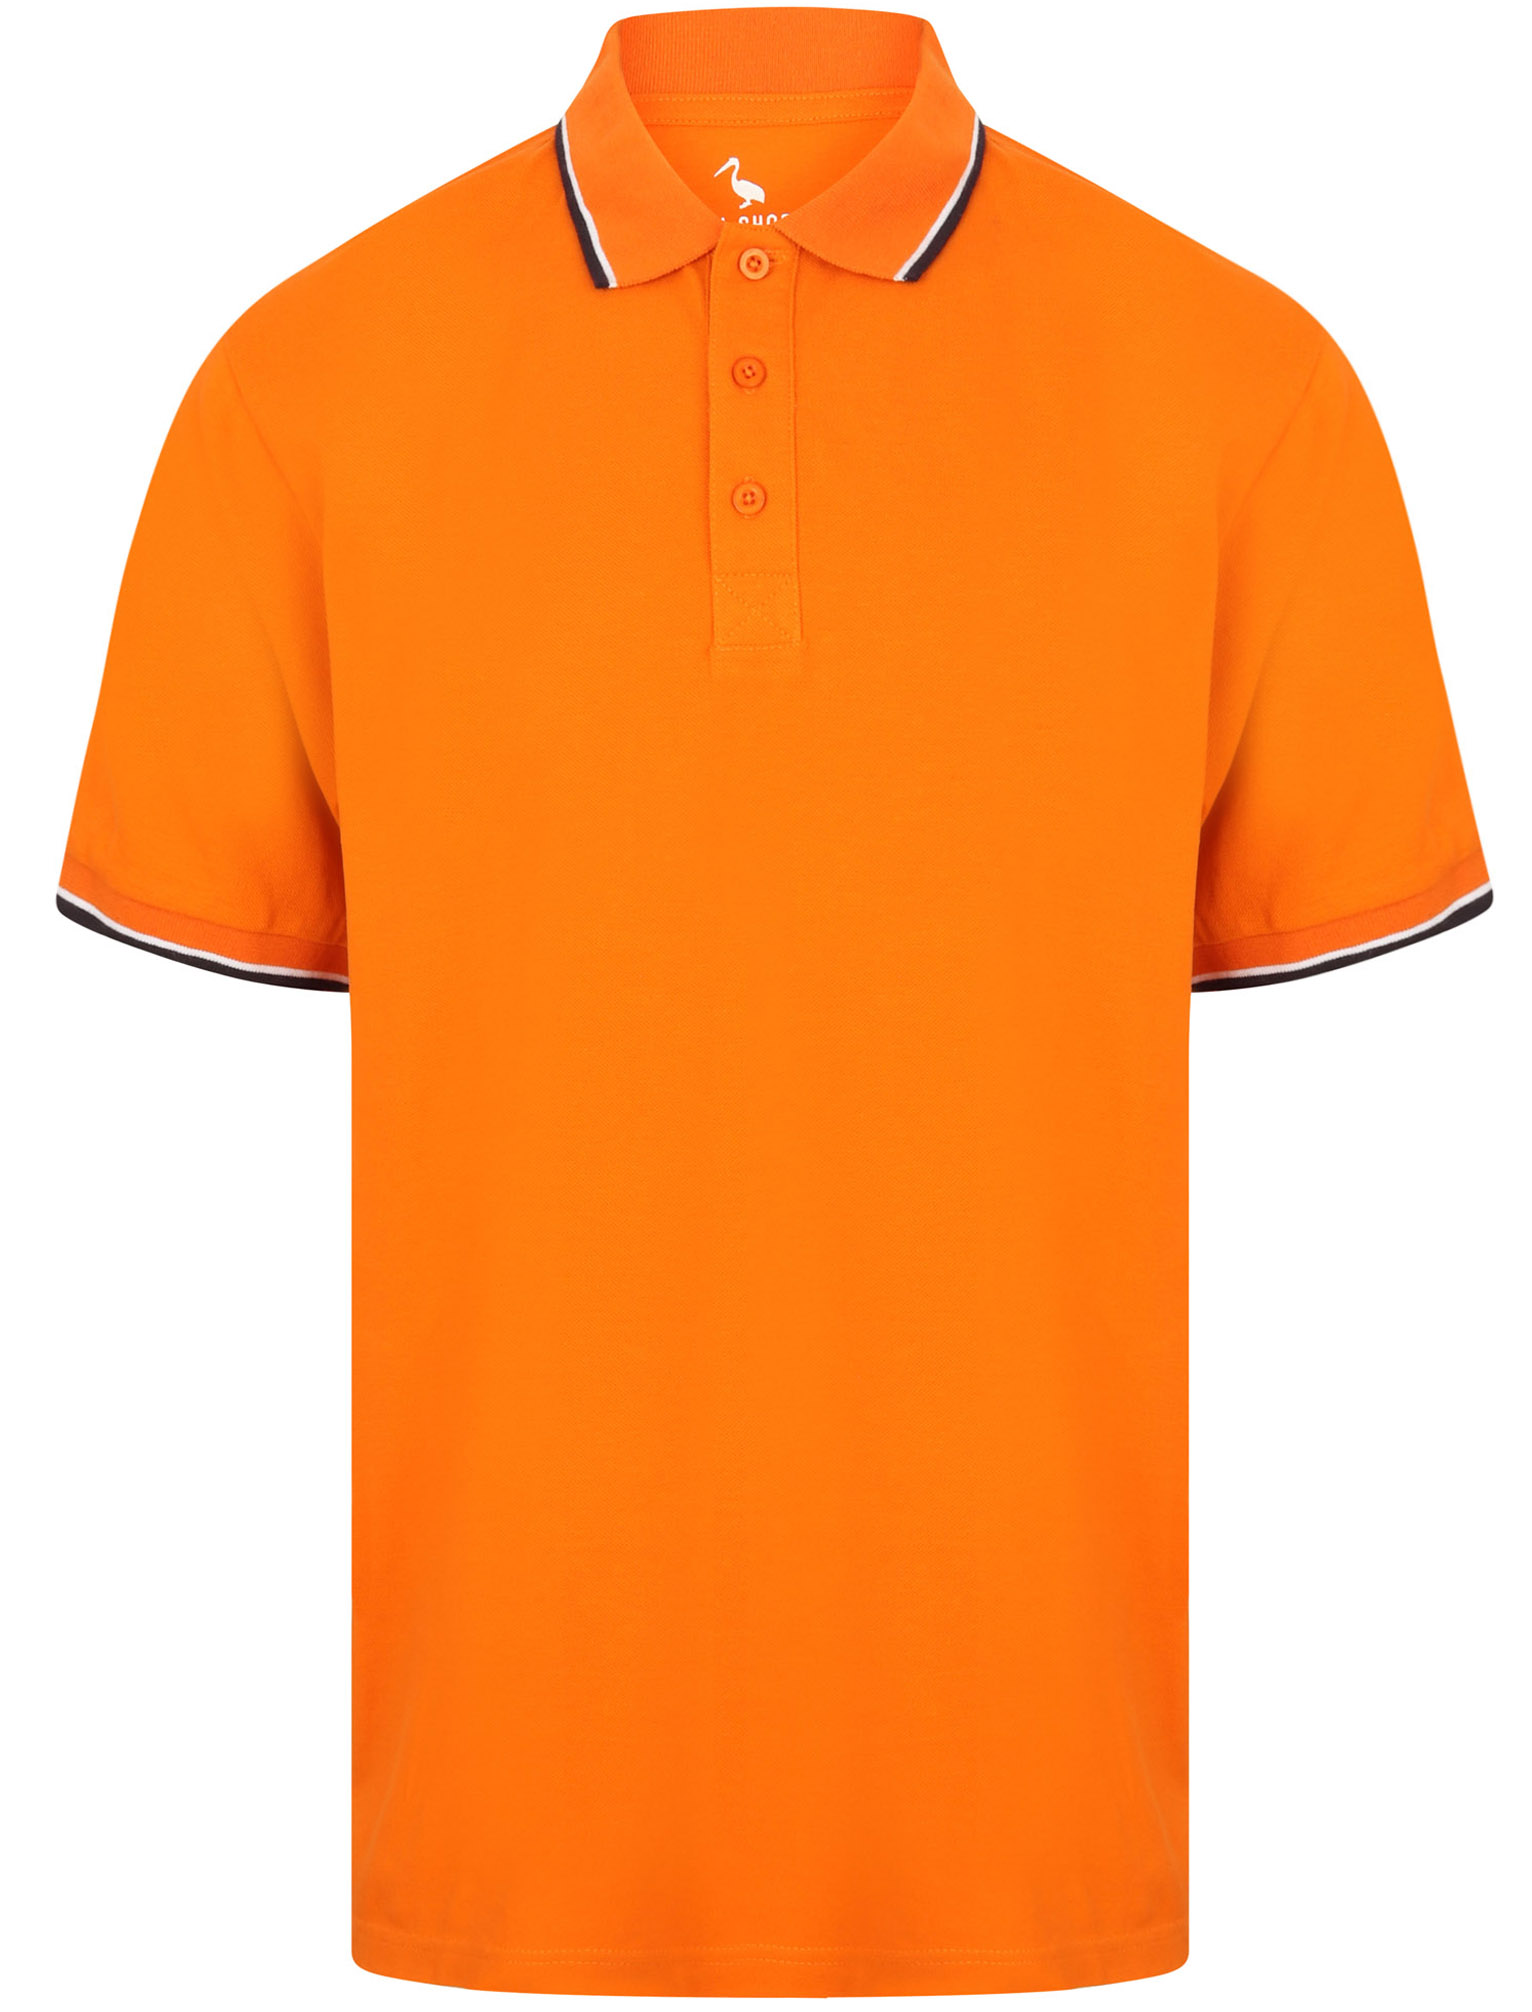 Men's Solid Polo Short Sleeve Shirt Pique Casual Cotton Top New Size M L XL XXL